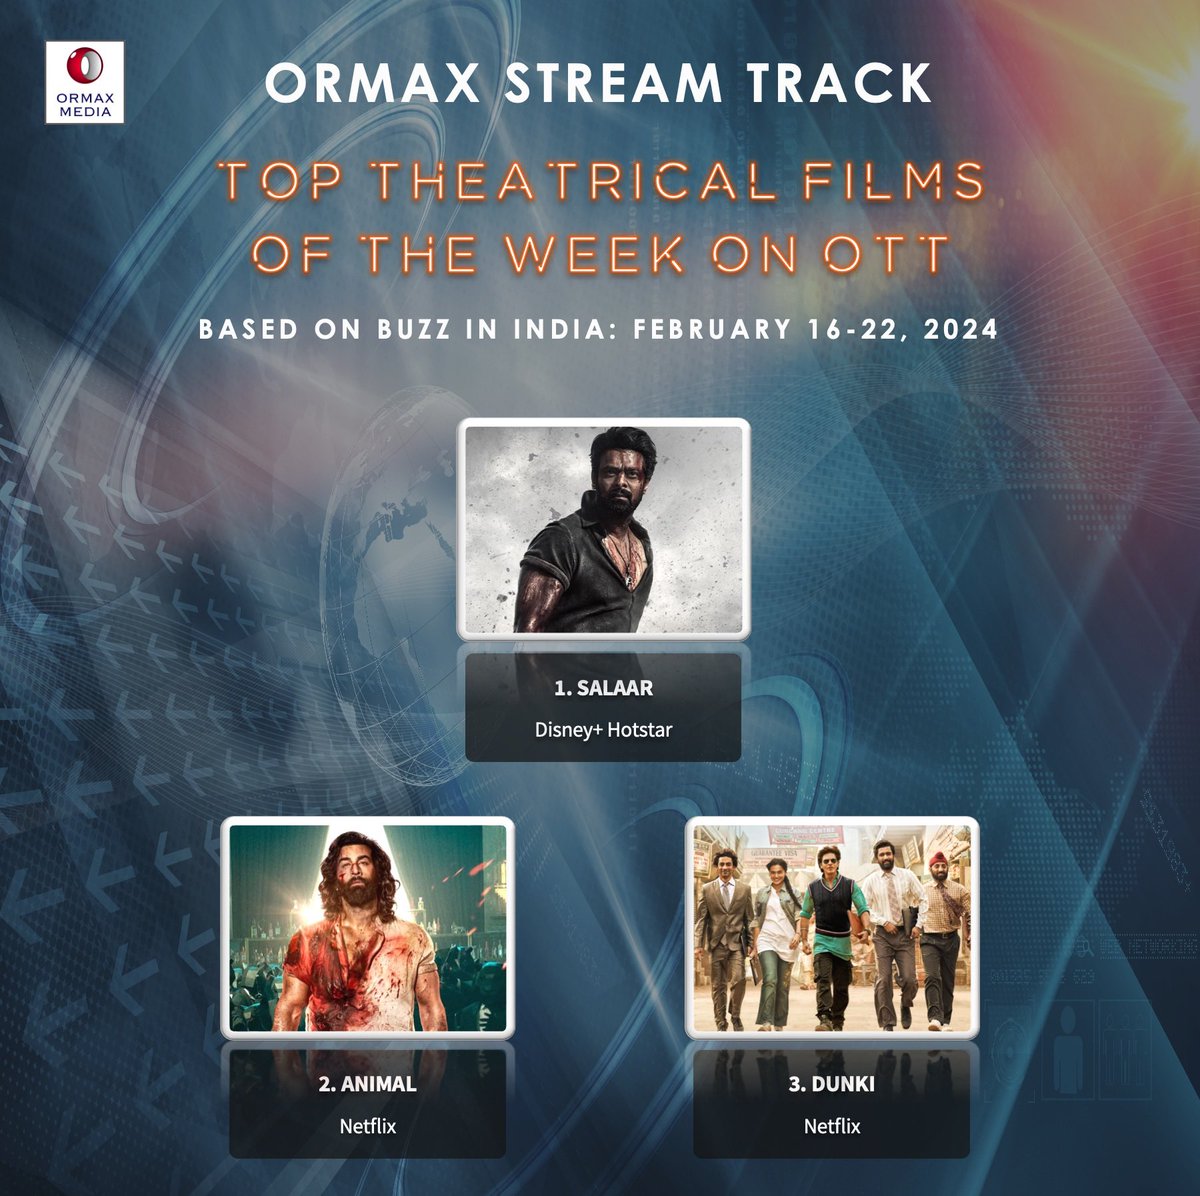 Ormax Stream Track: Top theatrical films on OTT in India, including upcoming films, based on Buzz (Feb 16-22) #OrmaxStreamTrack #OTT 
#Prabhas𓃵  #srk #AnimalPark #Tollywood #SaripodhaaSanivaaram #MaheshBabu